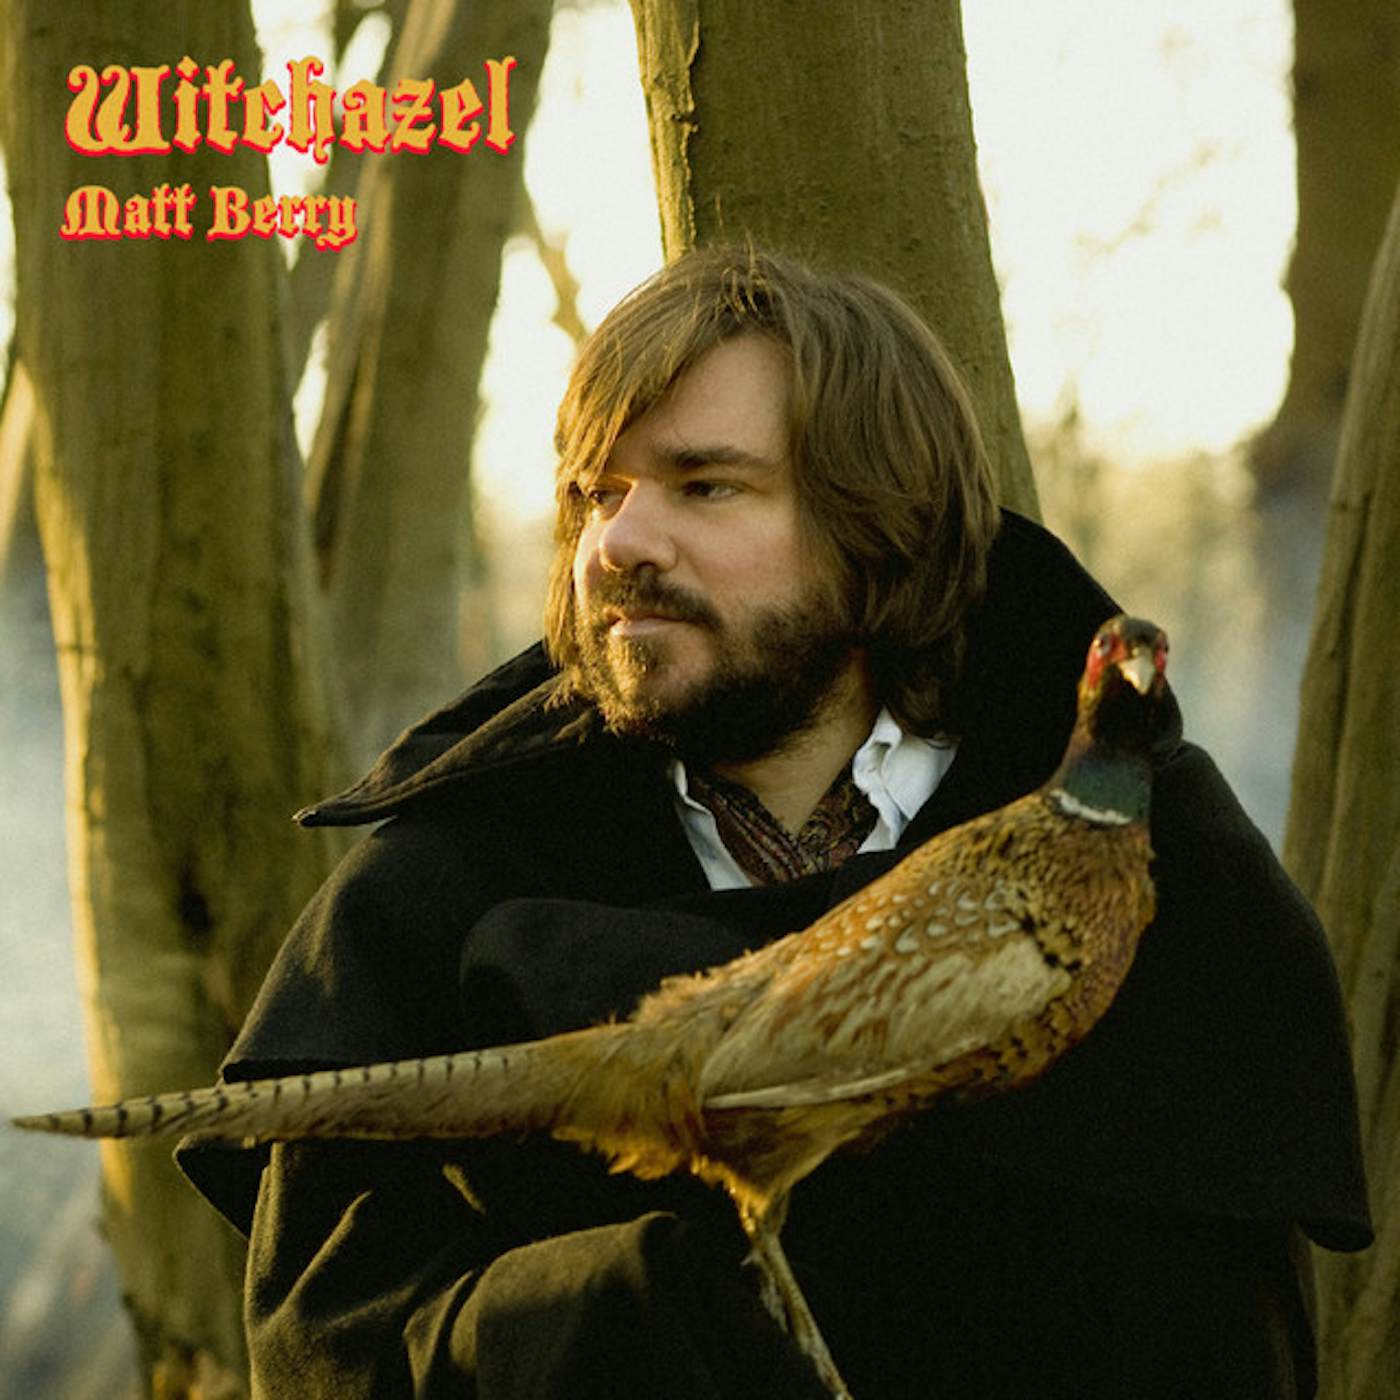 Matt Berry Witchazel Vinyl Record